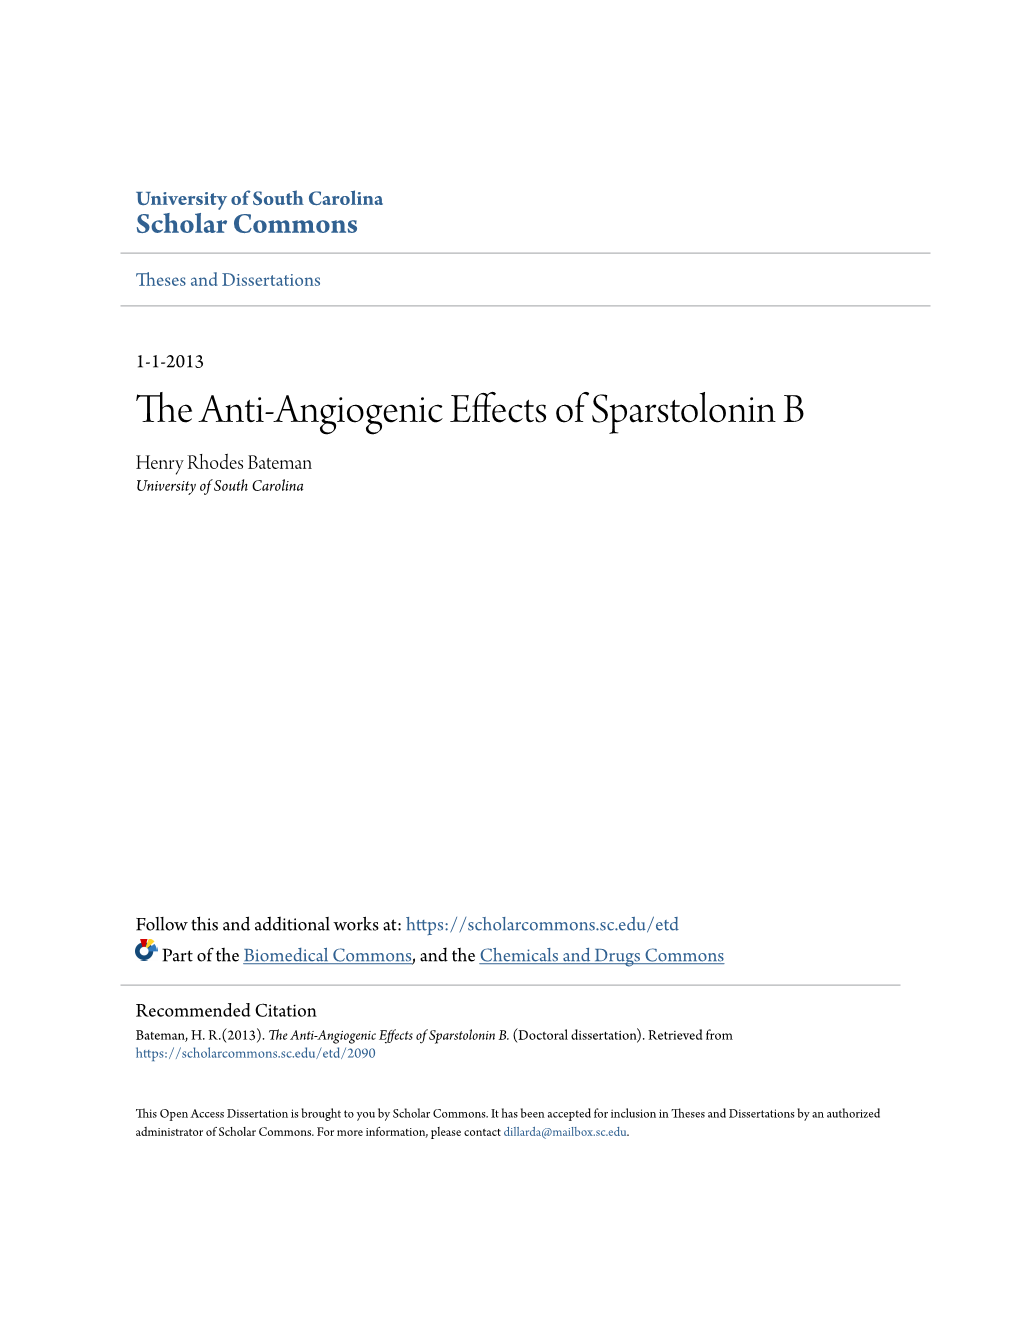 The Anti-Angiogenic Effects of Sparstolonin B Henry Rhodes Bateman University of South Carolina